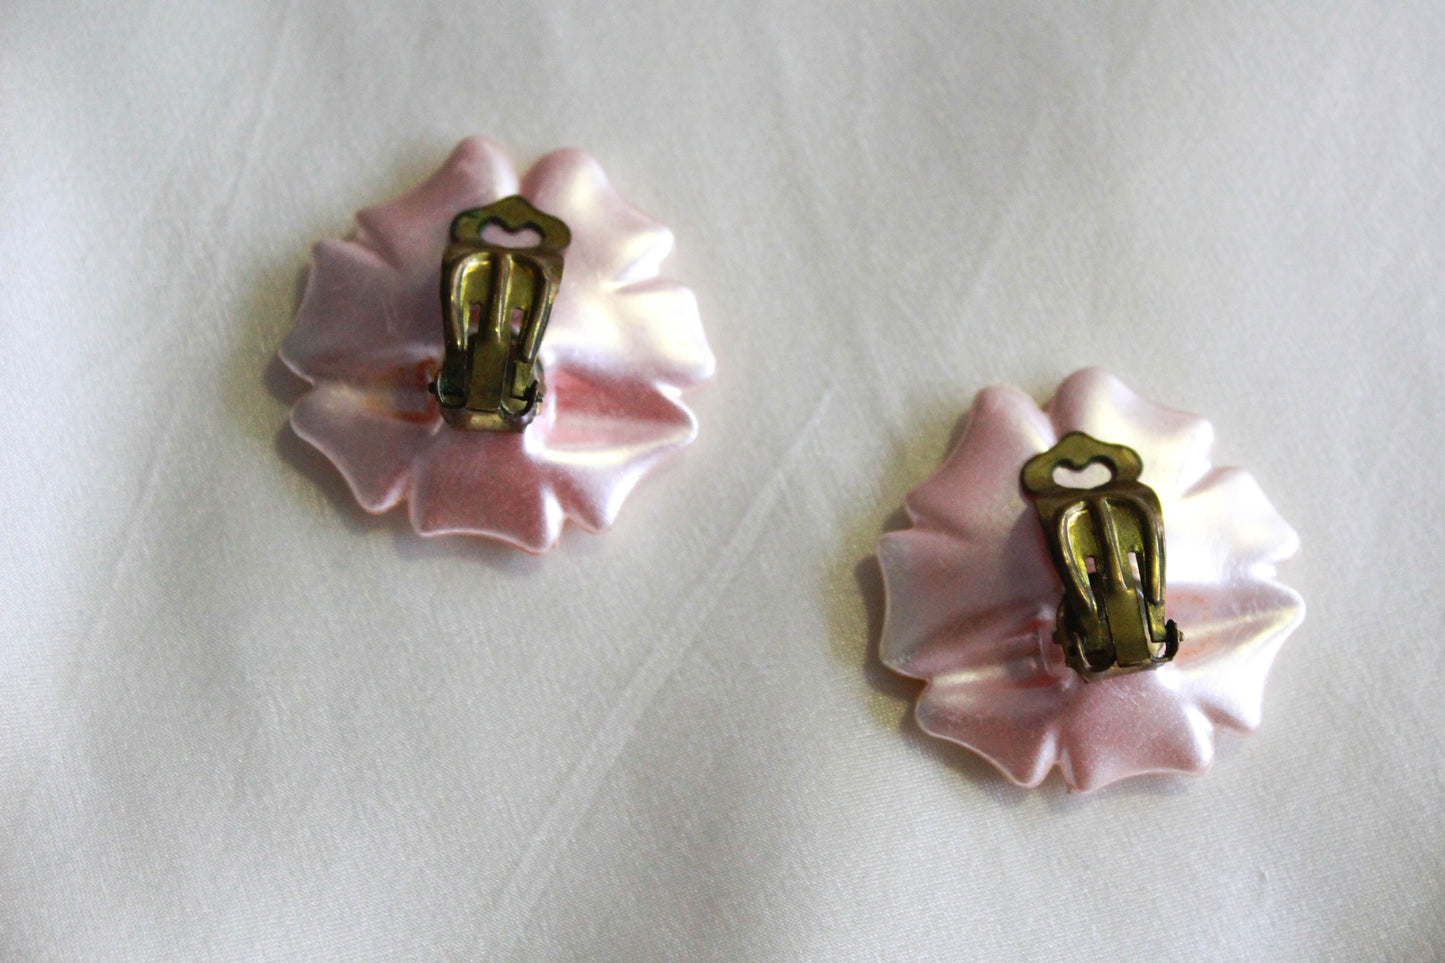 1950s Pearlescent Flower Earrings